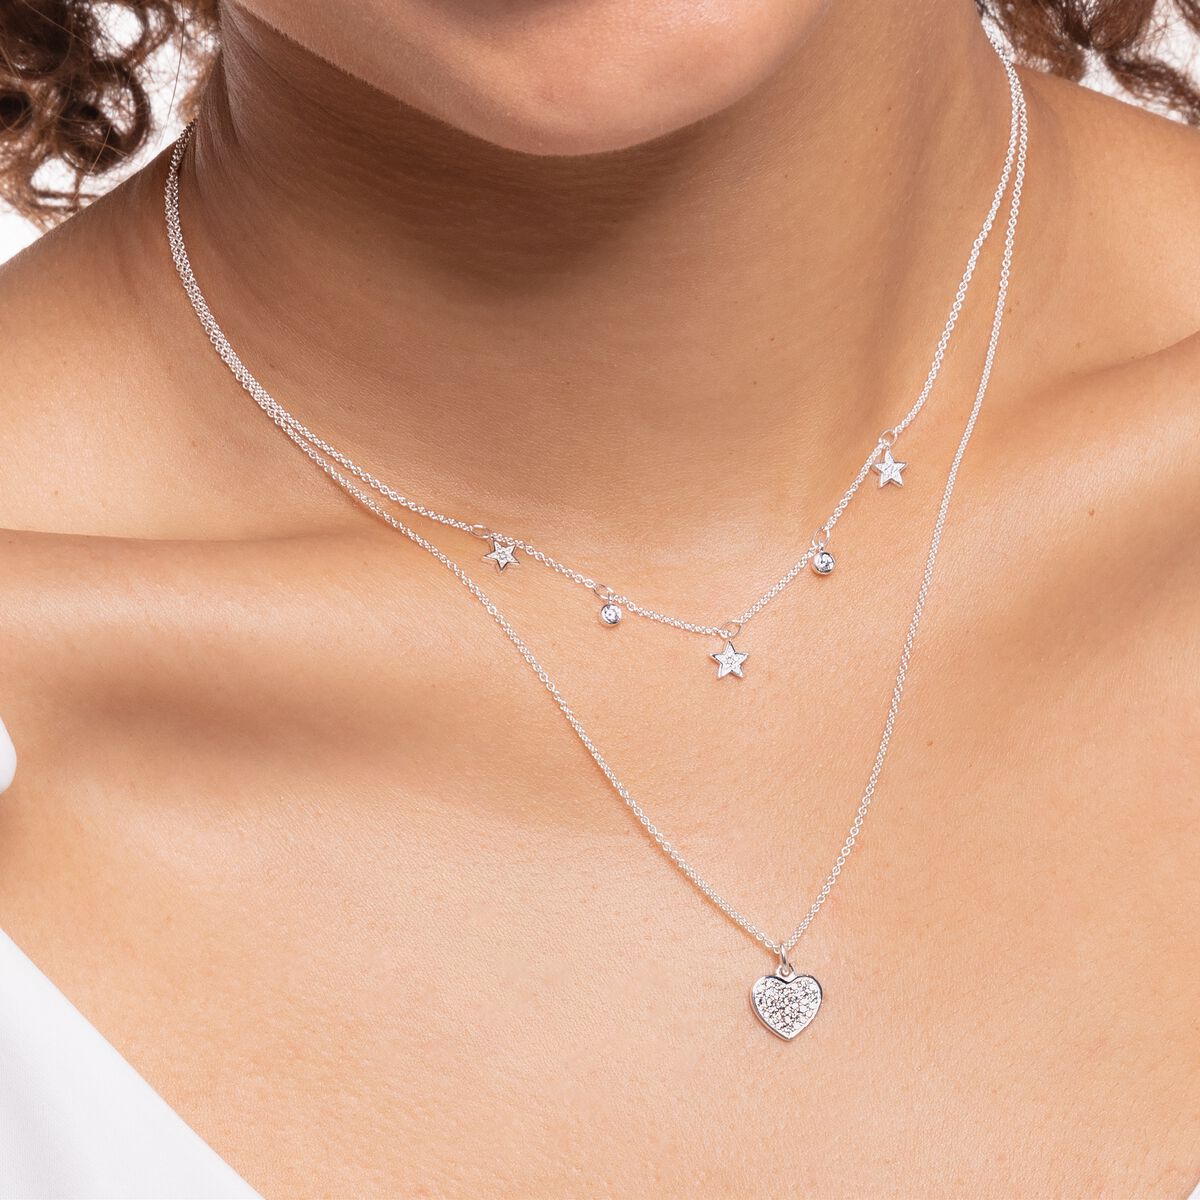 Heart necklace 38cm in silver SABO THOMAS –